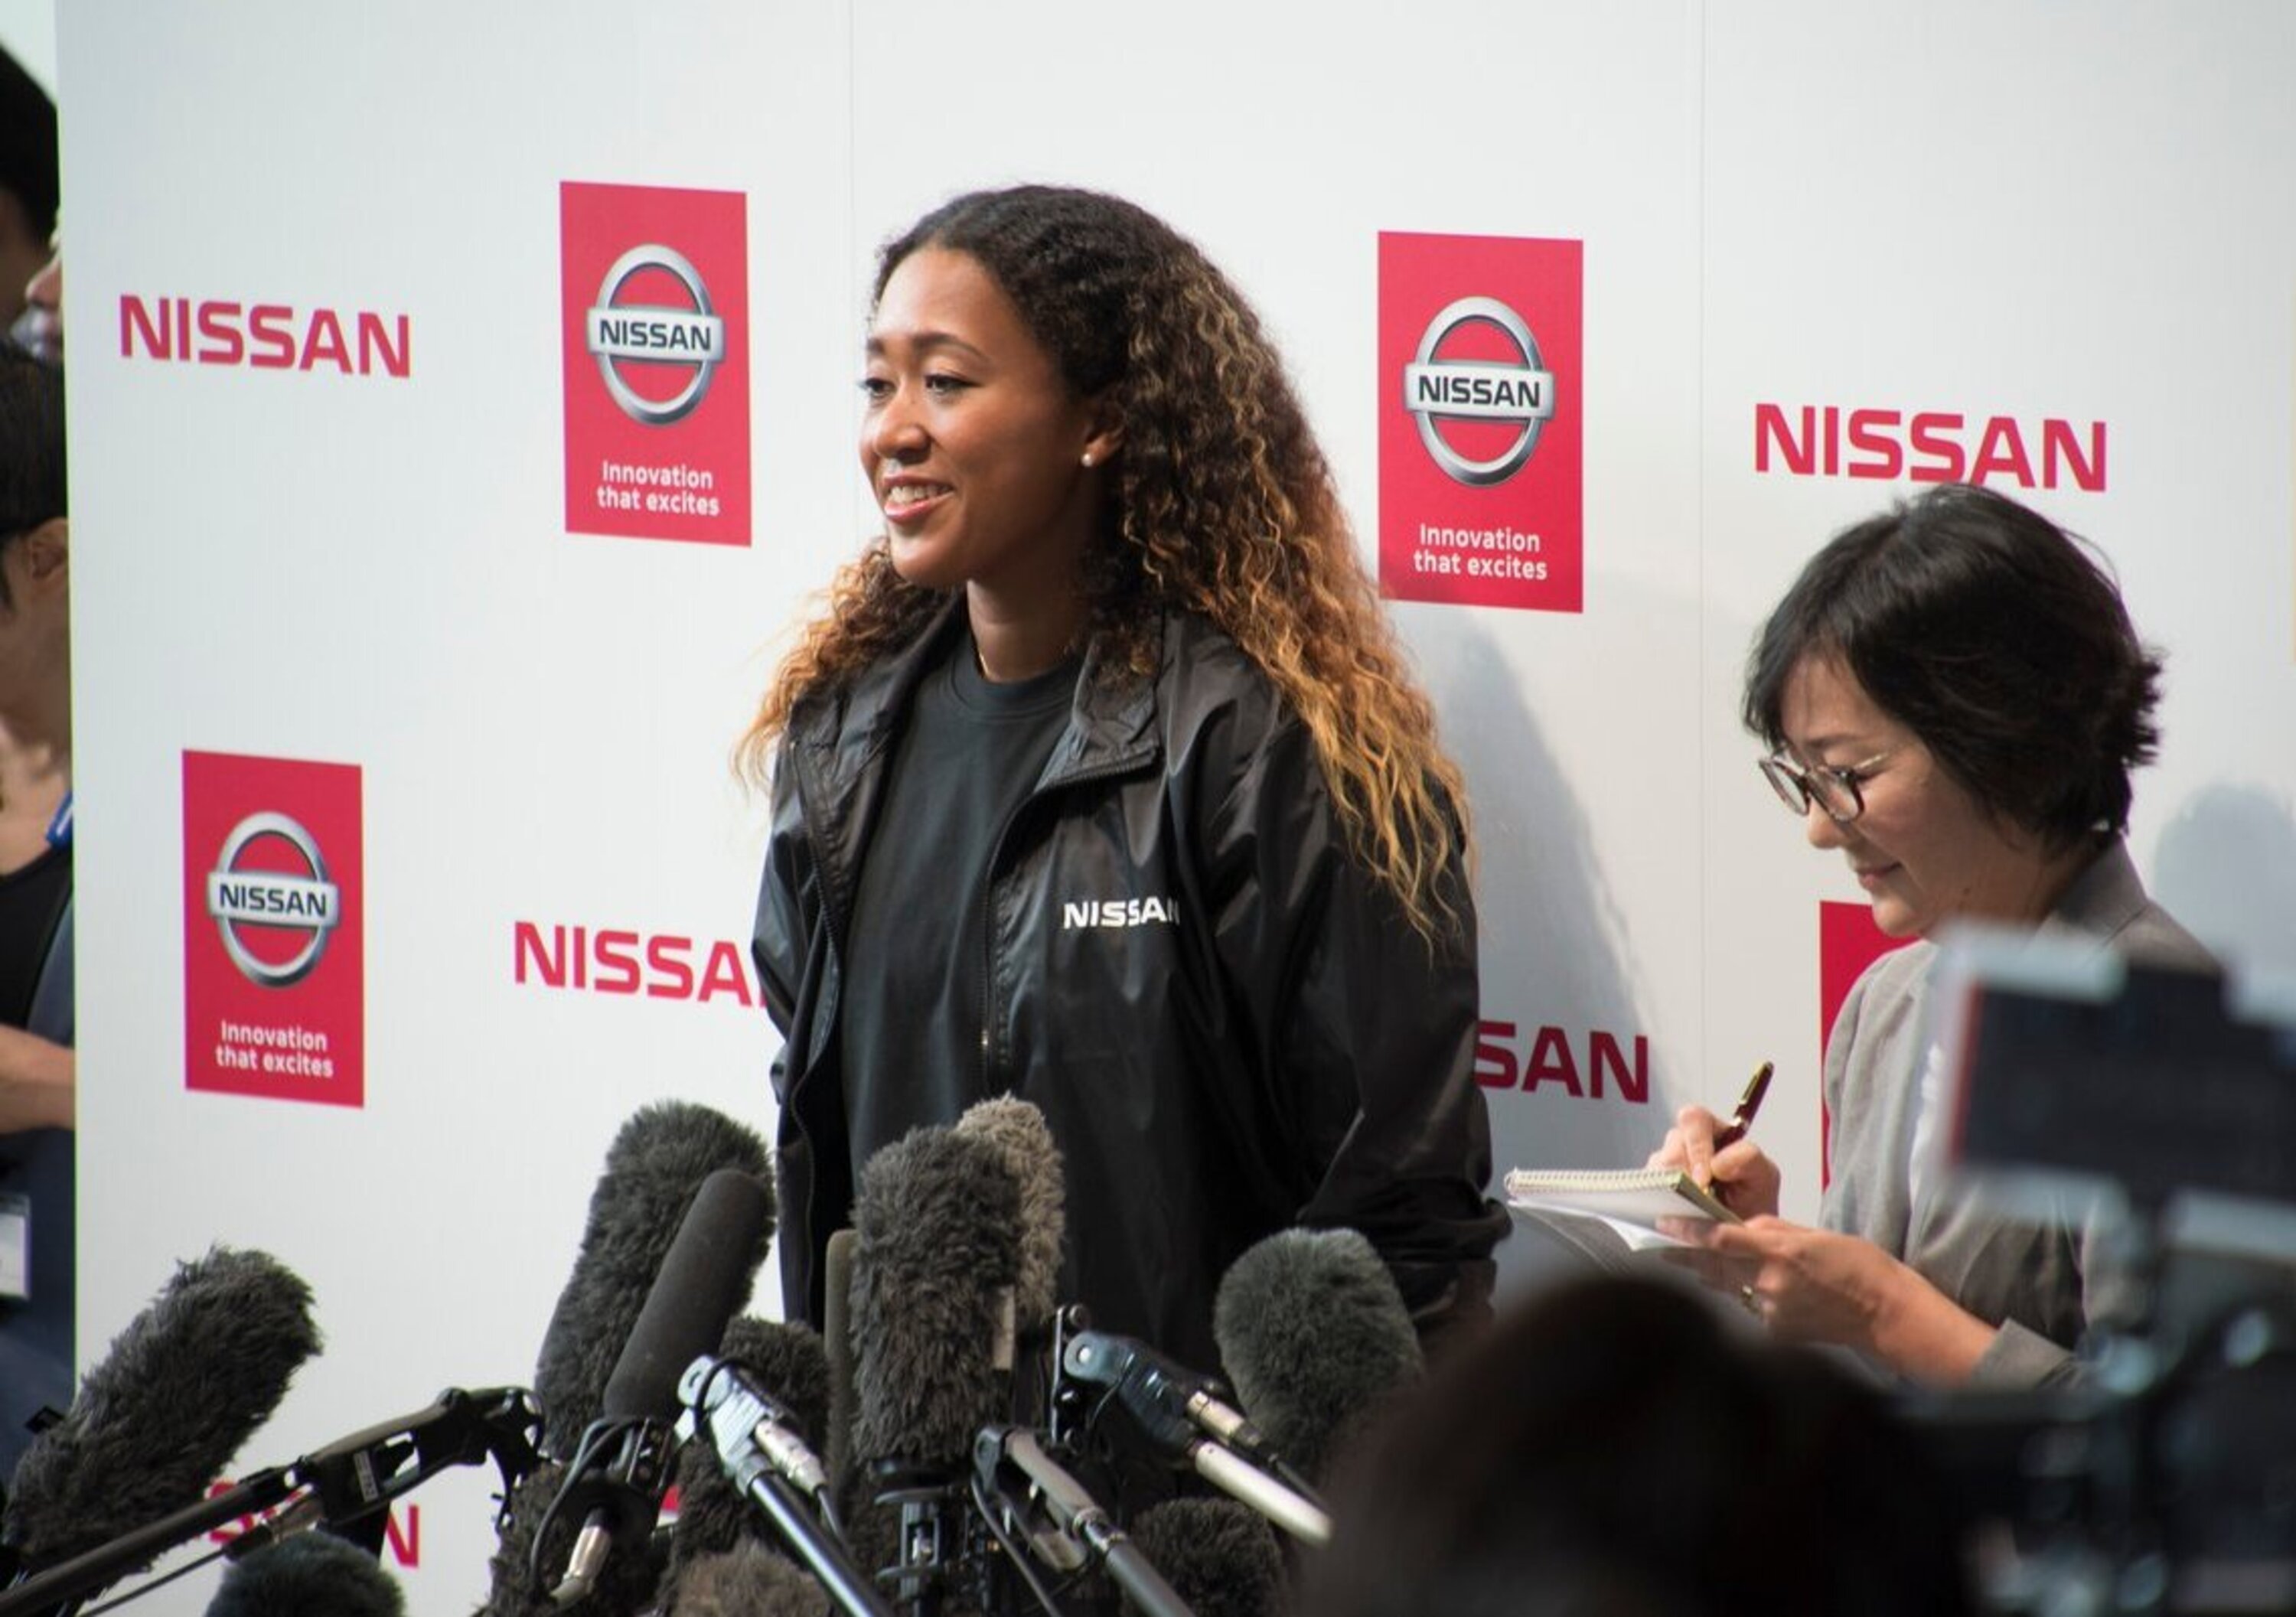 Nissan, La tennista Naomi Osaka testimonial globale del brand